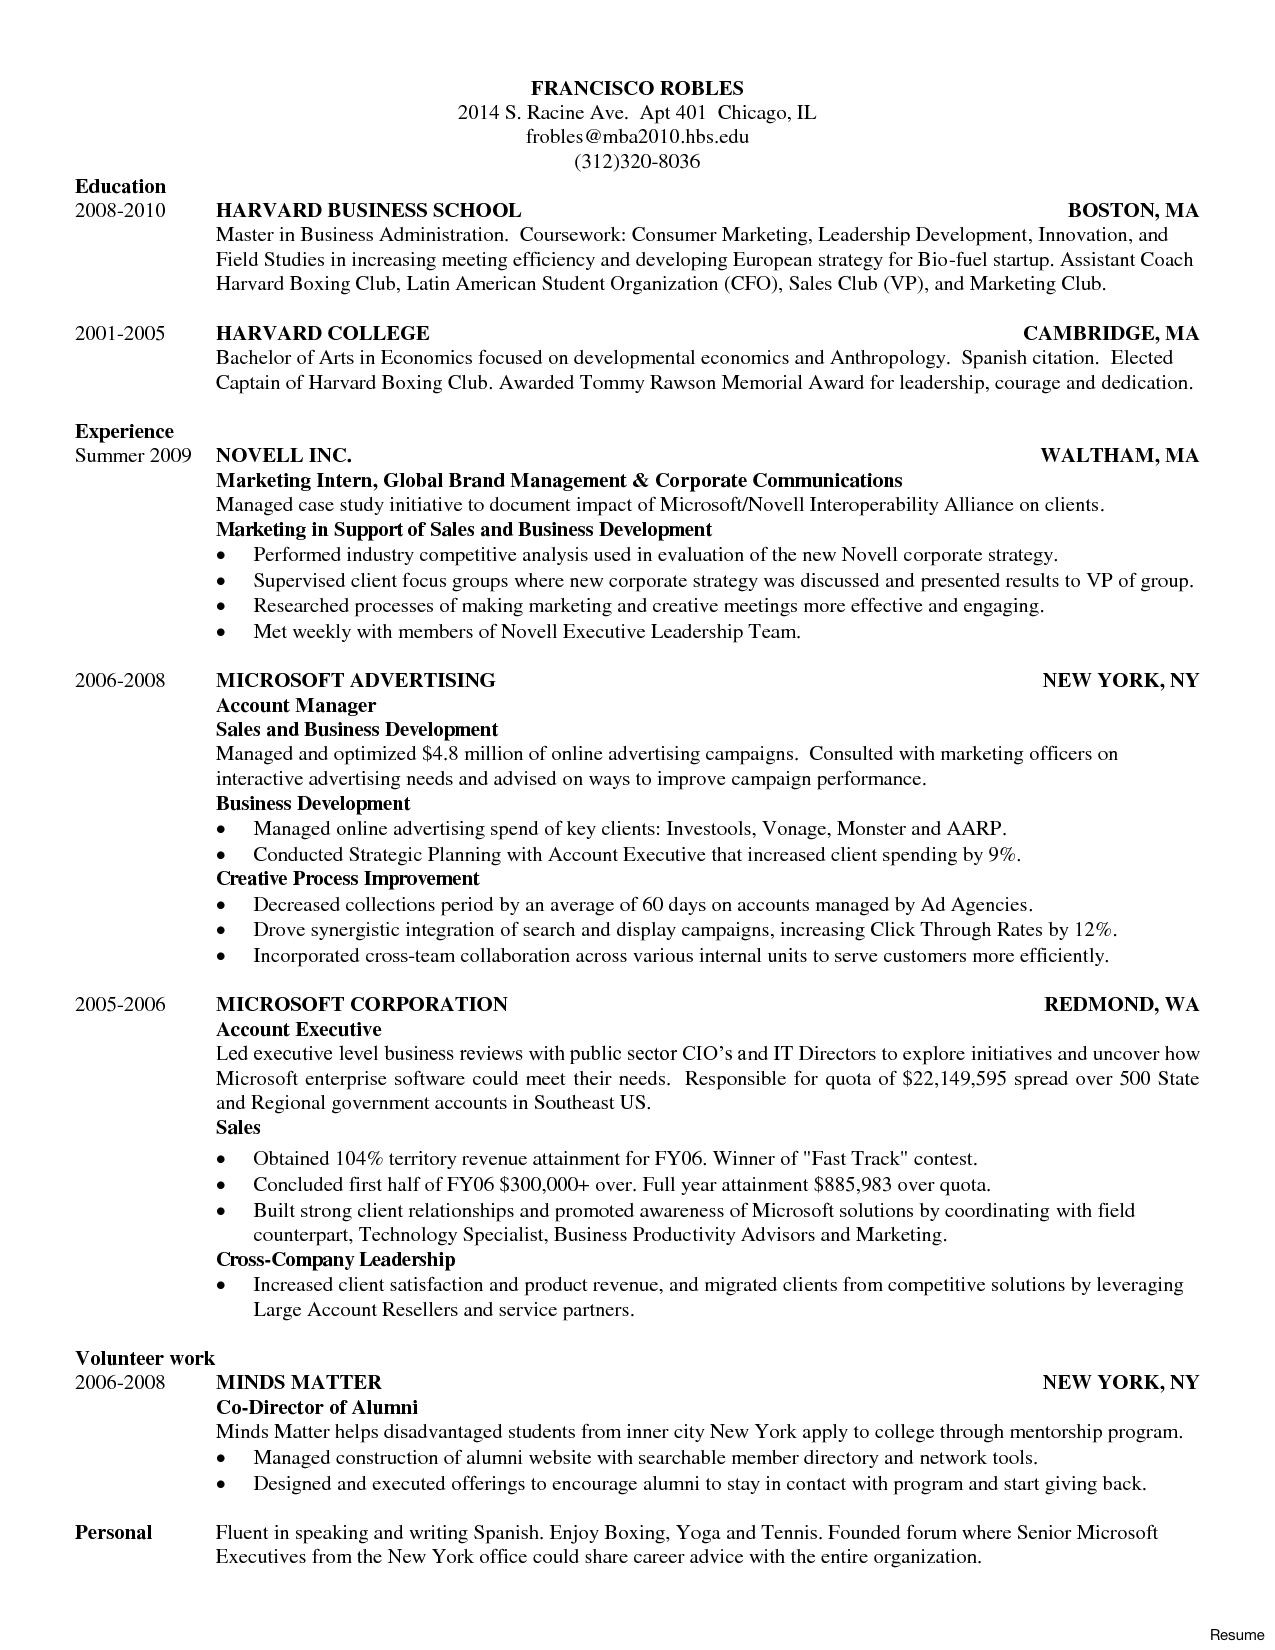 Resume for Masters Application Sample Harvard Cv Template Harvard – Resume format Nursing Resume Template …